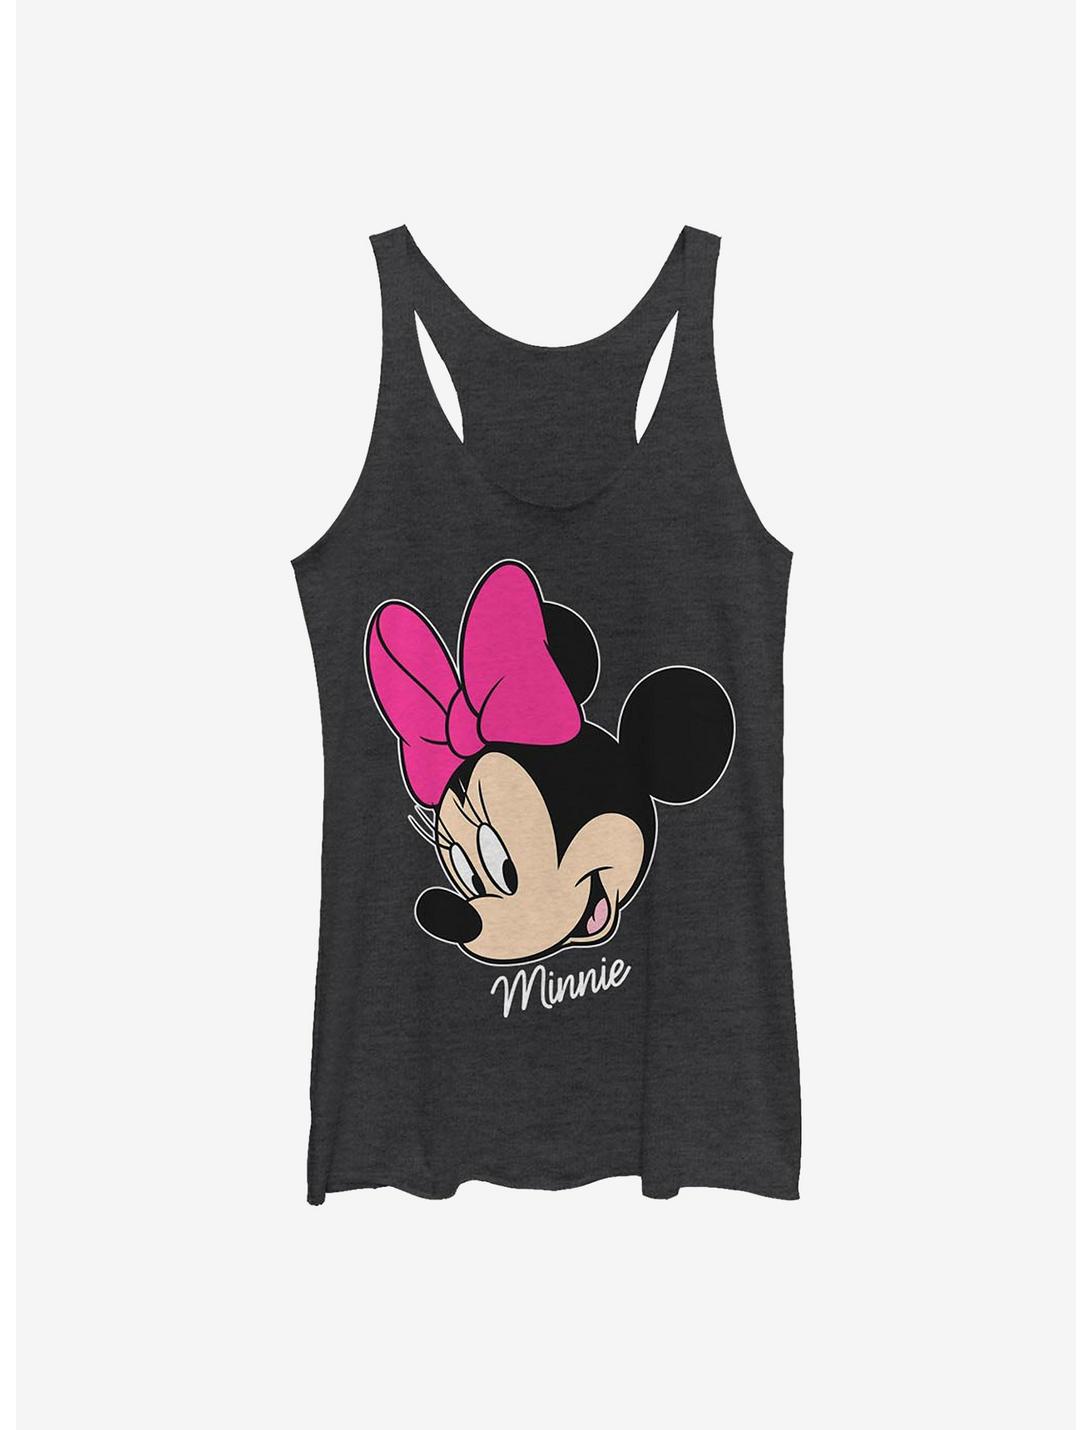 Disney Minnie Mouse Big Face Womens Tank Top - BLACK